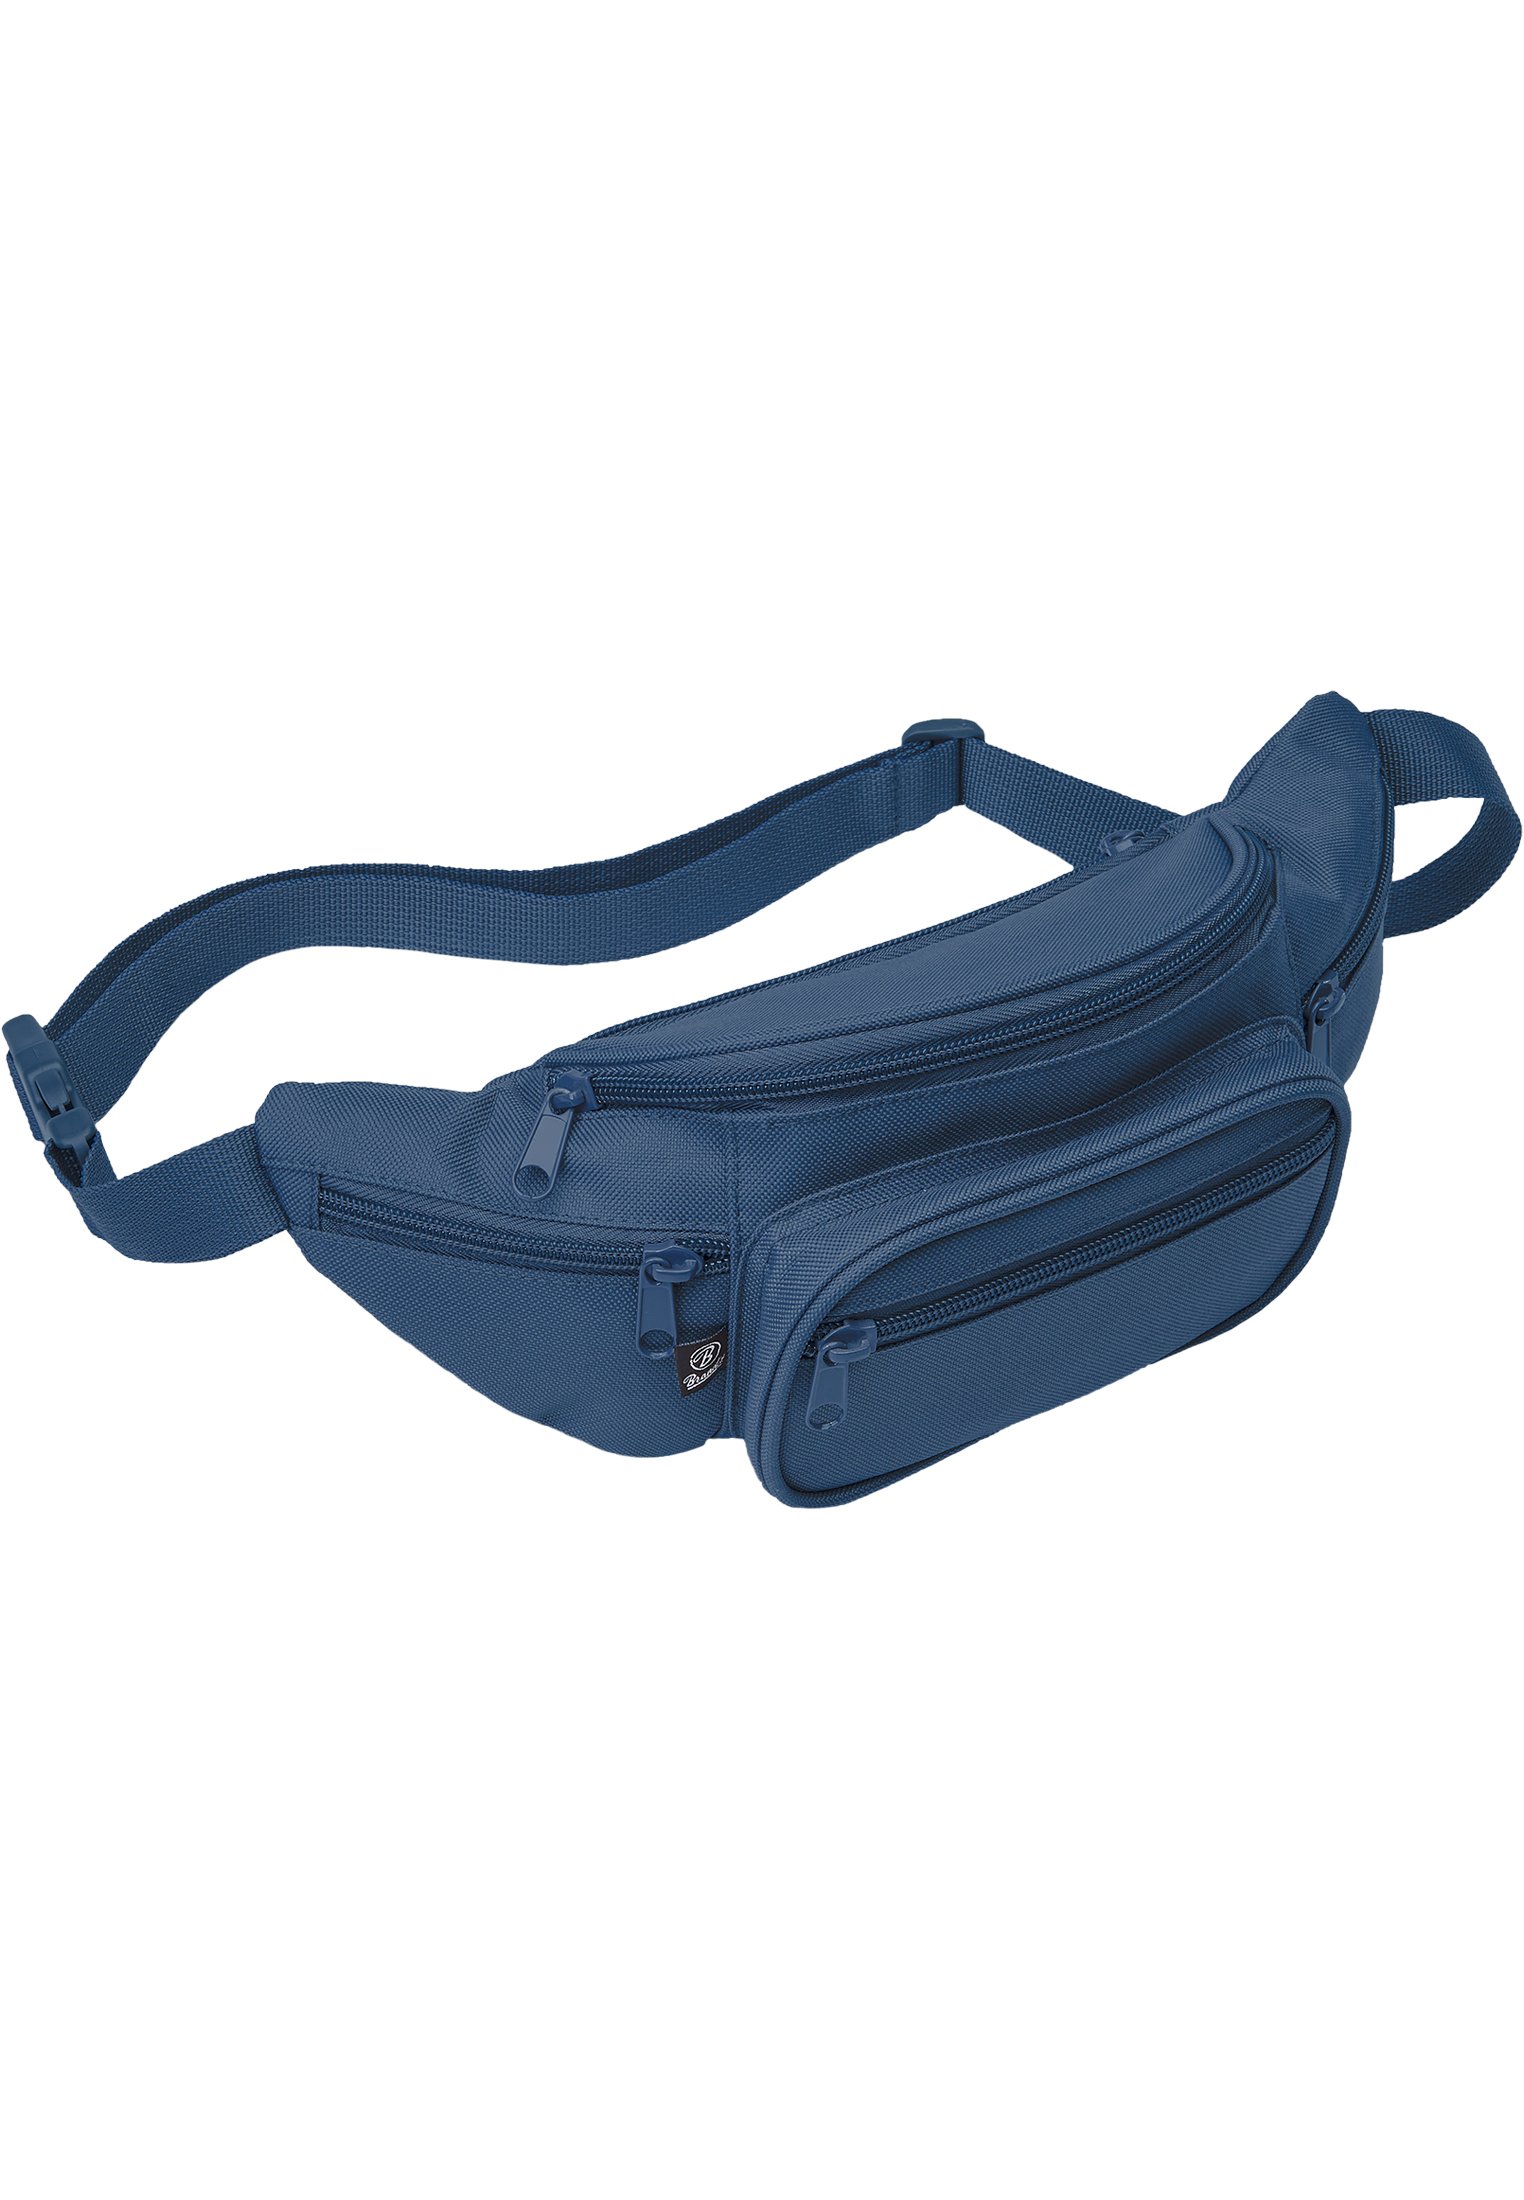 Pocket Waist Bag Navy